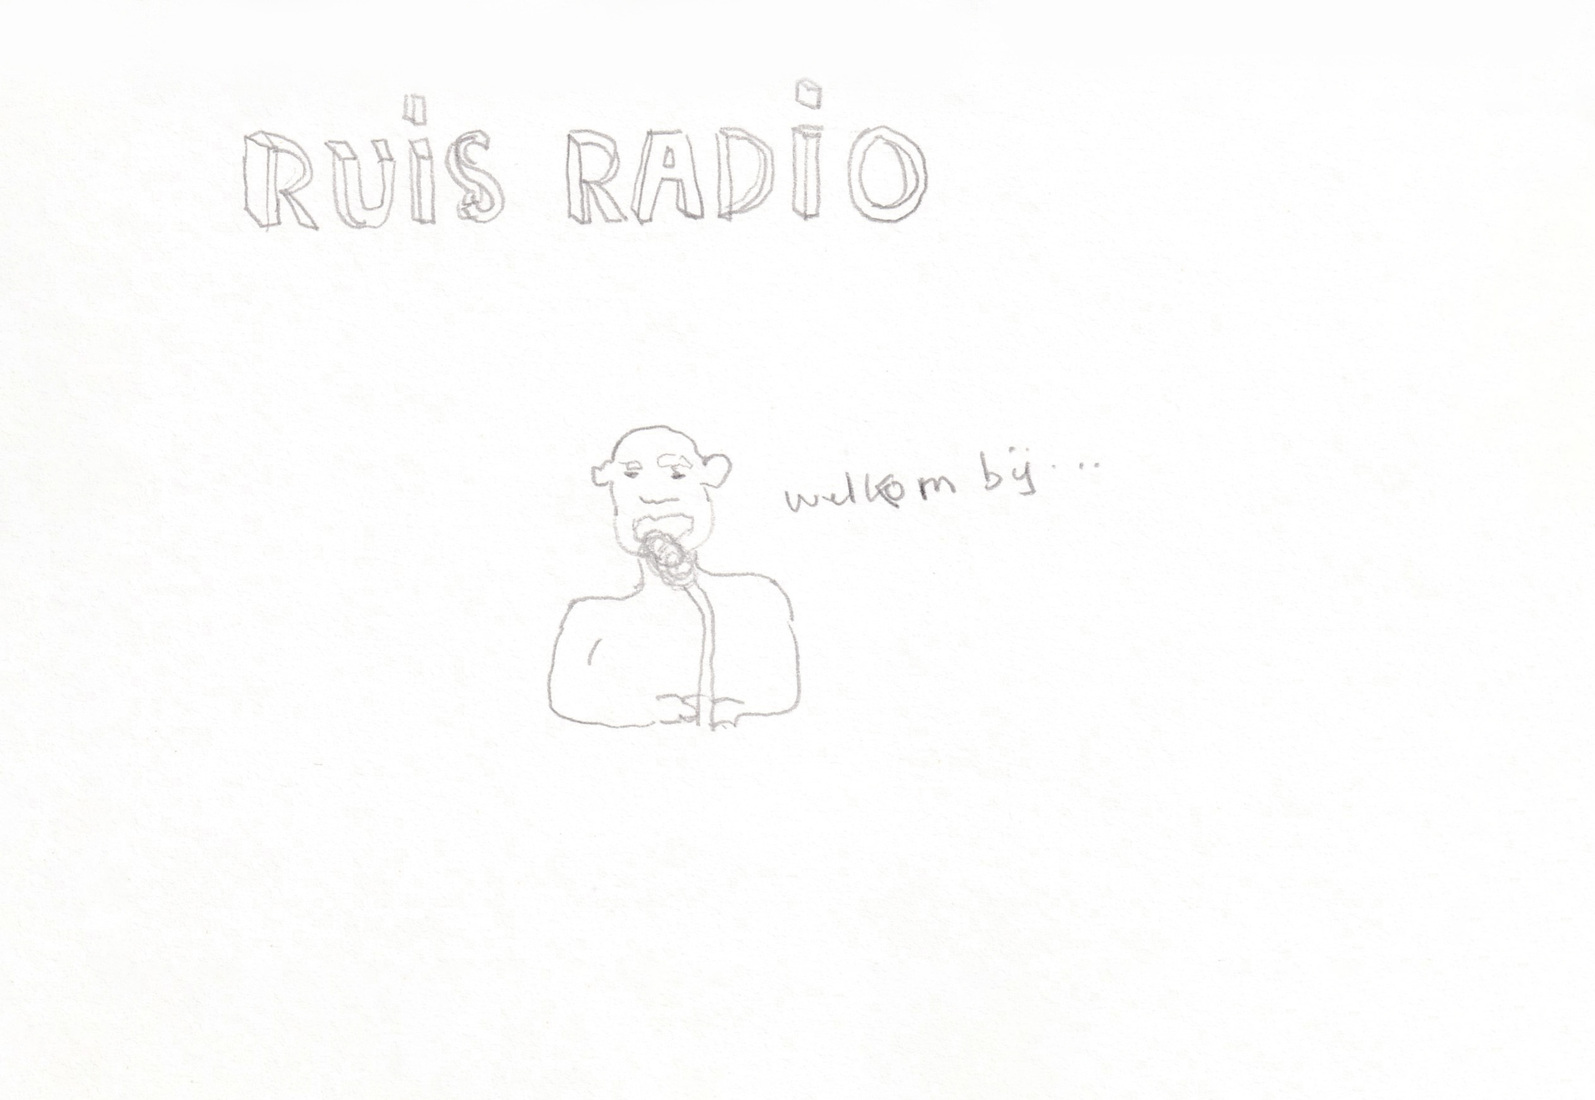 Ruis radio